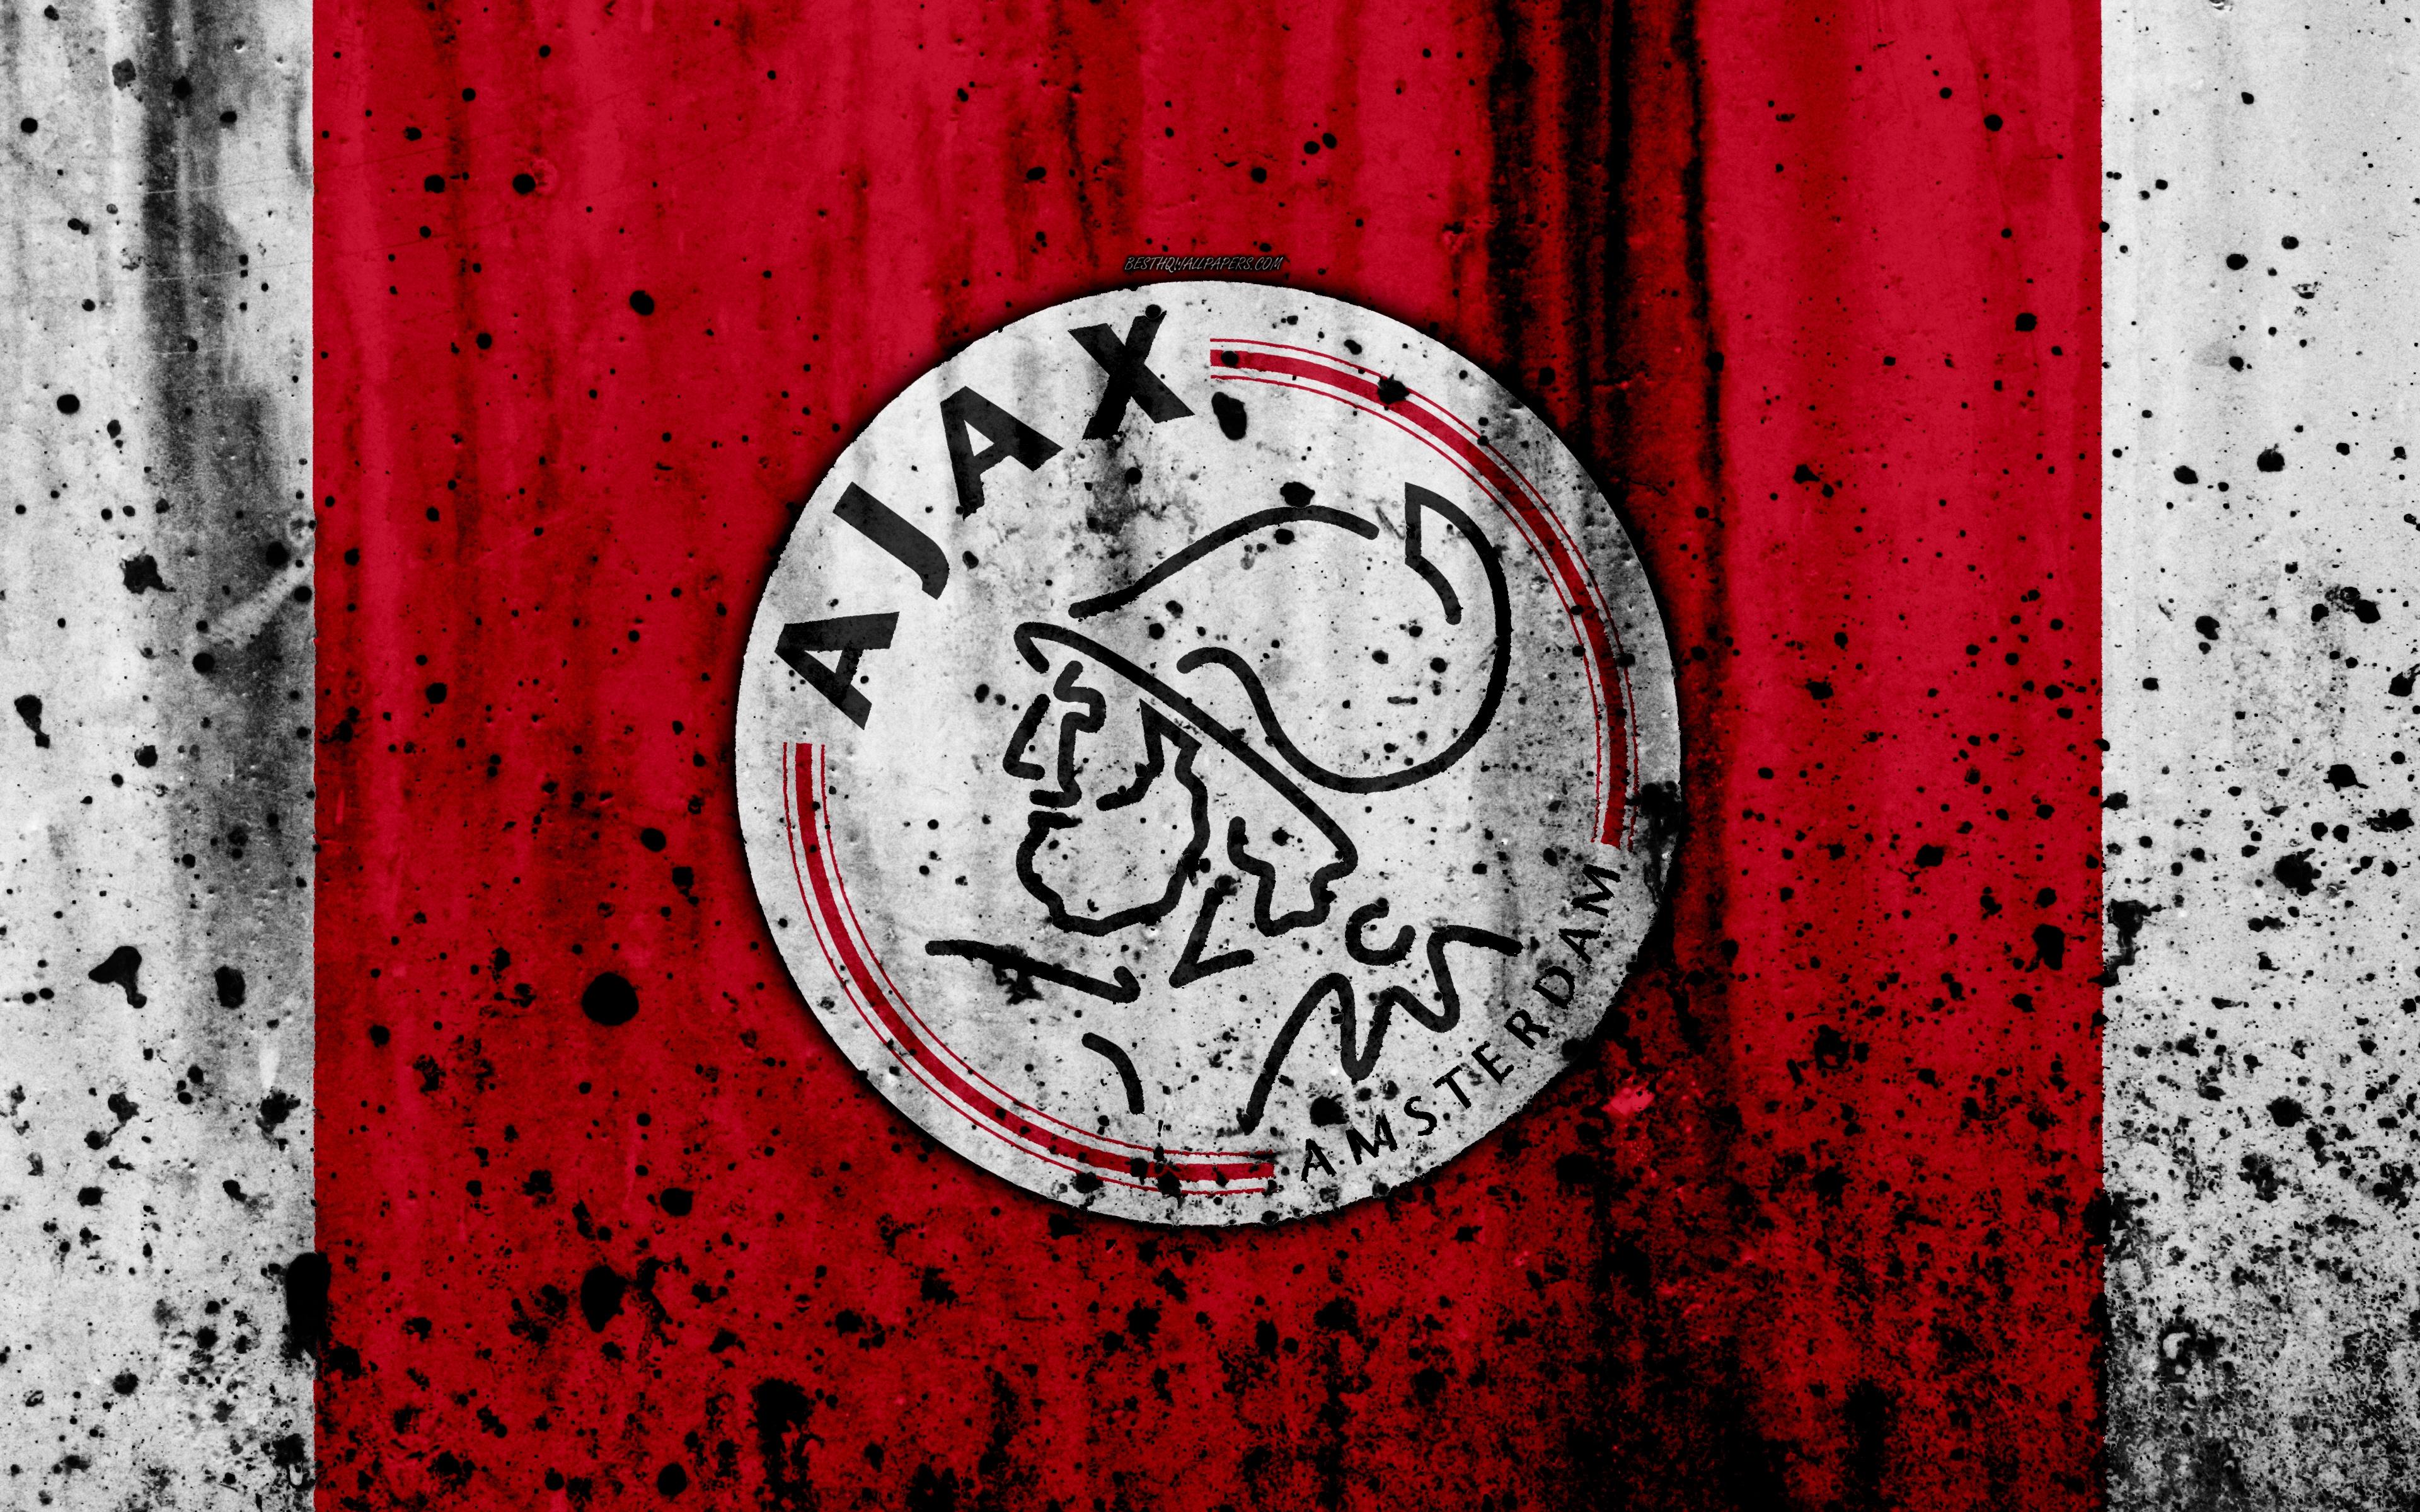 Awesome Afc Ajax Wallpaper HD. Great Foofball Club